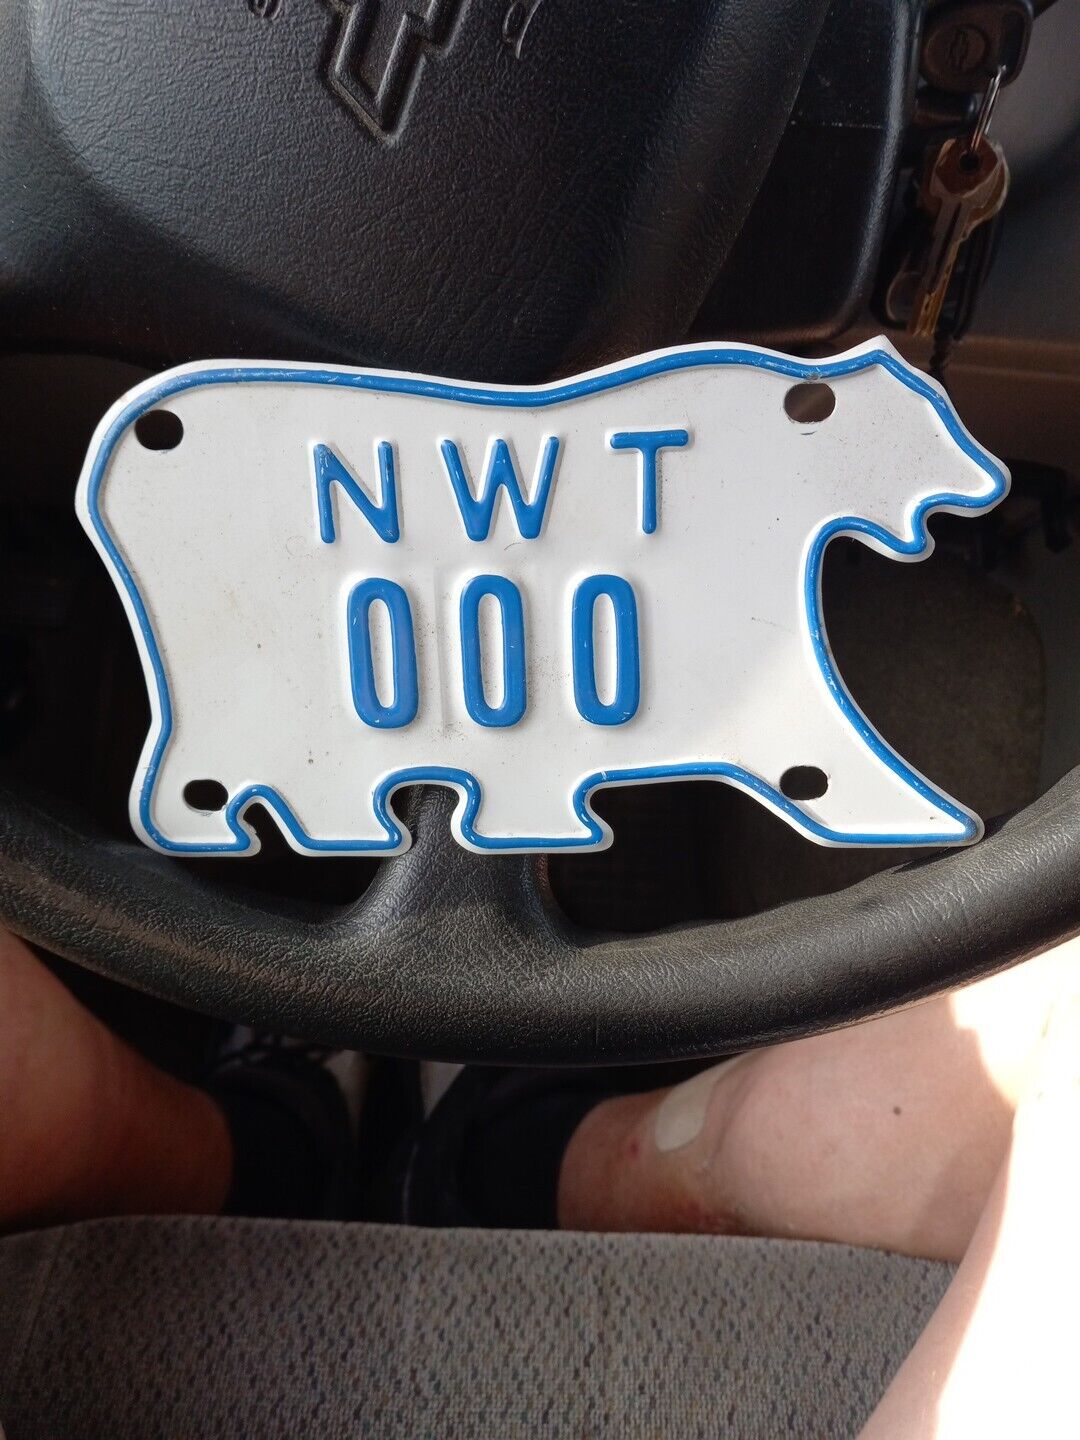 Northwest Territories Canada Polar Bear 000 Sample License Plate